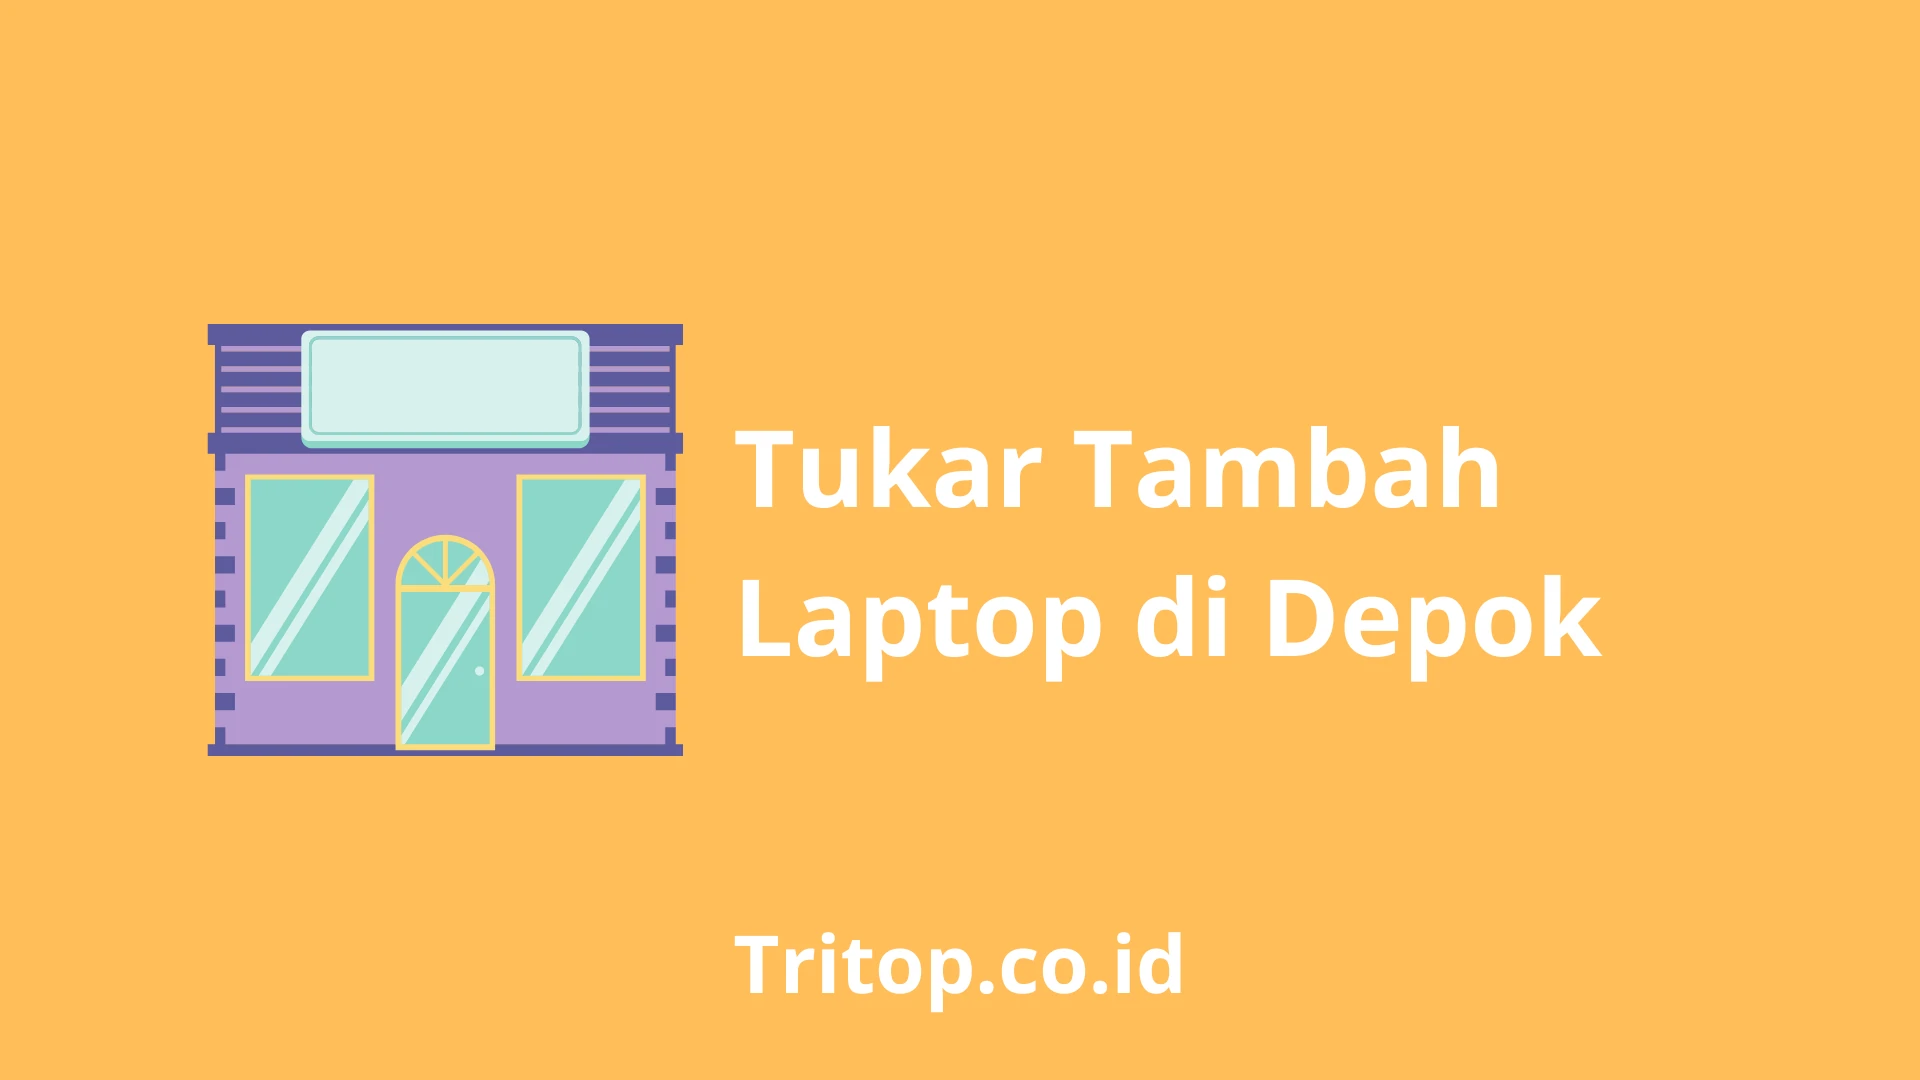 Tukar Tambah Laptop Depok tritop.co.id